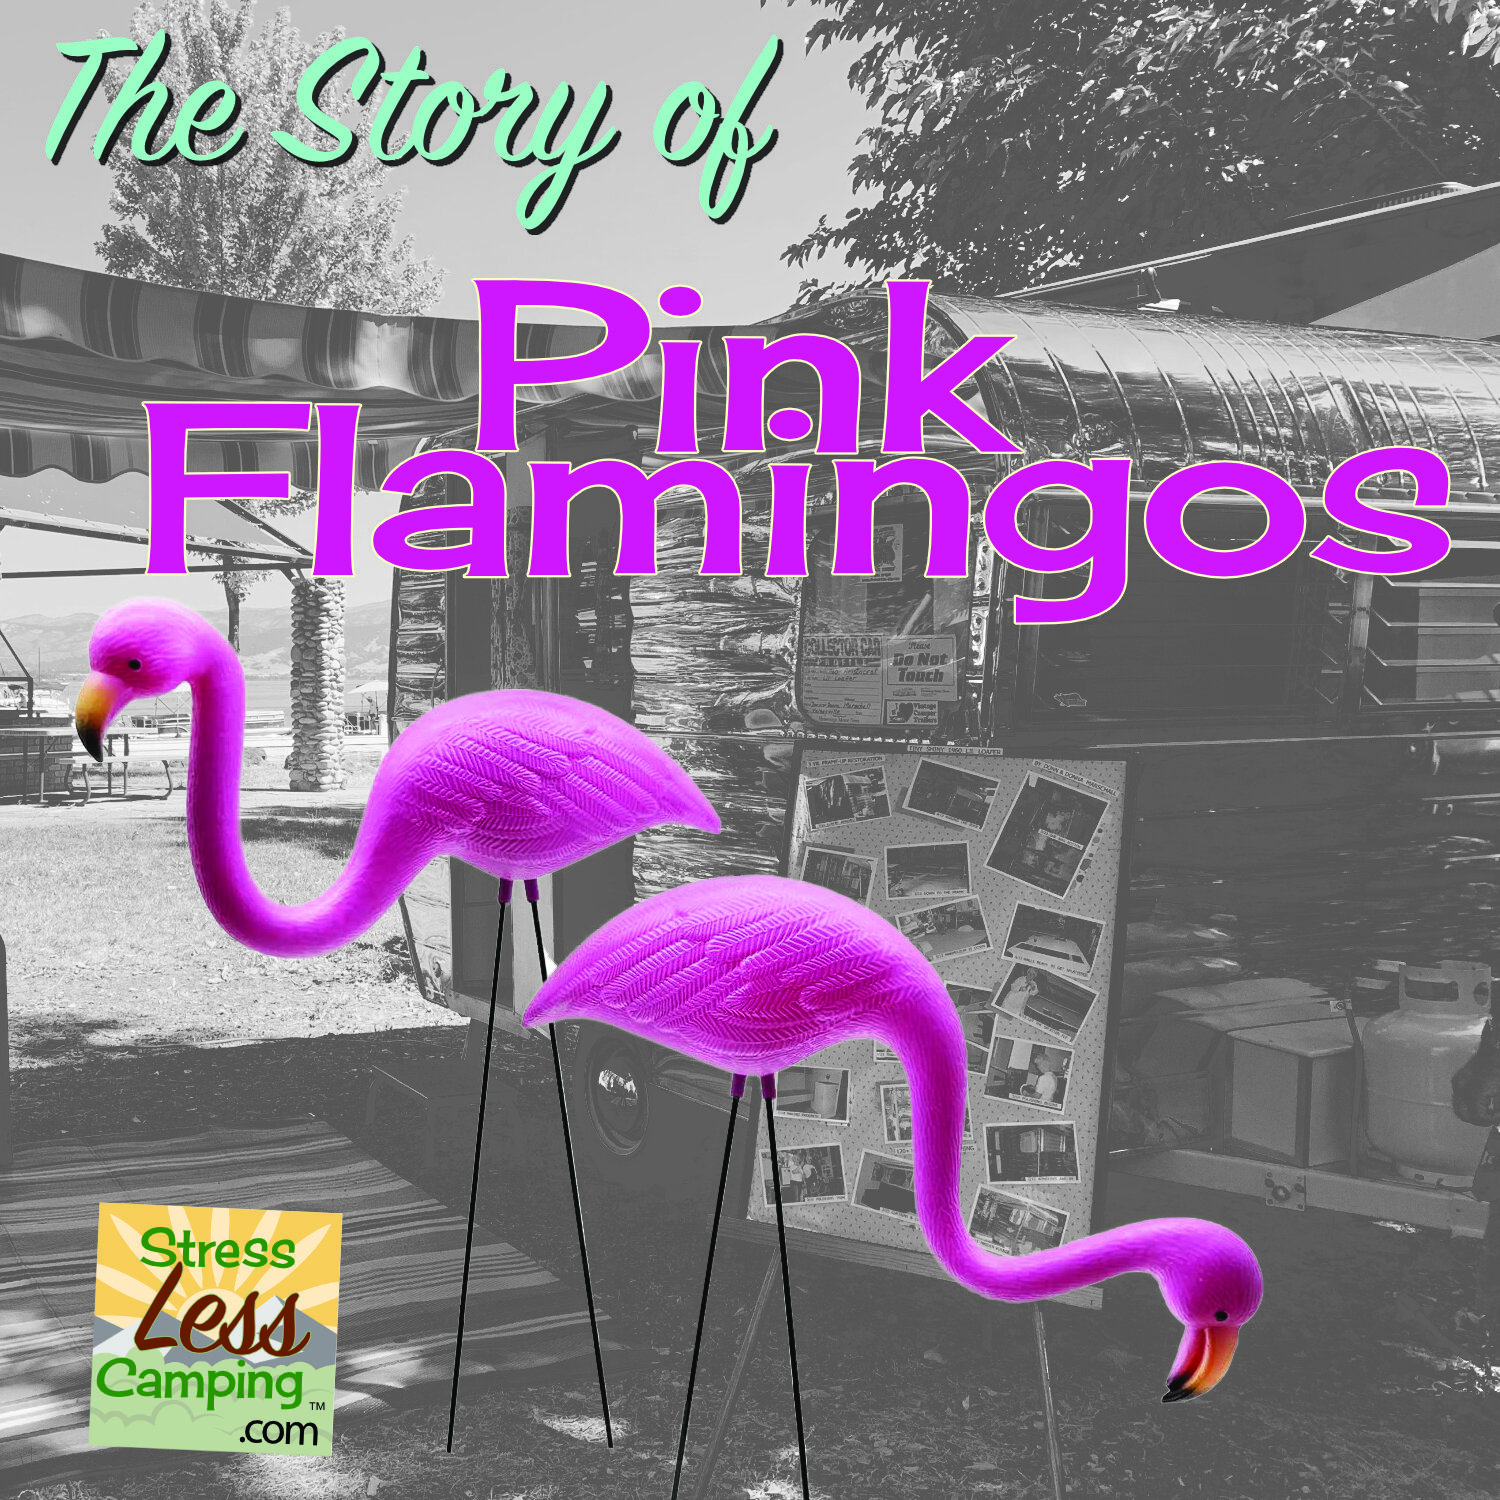 The history of Pink Flamingos - secret symbol?